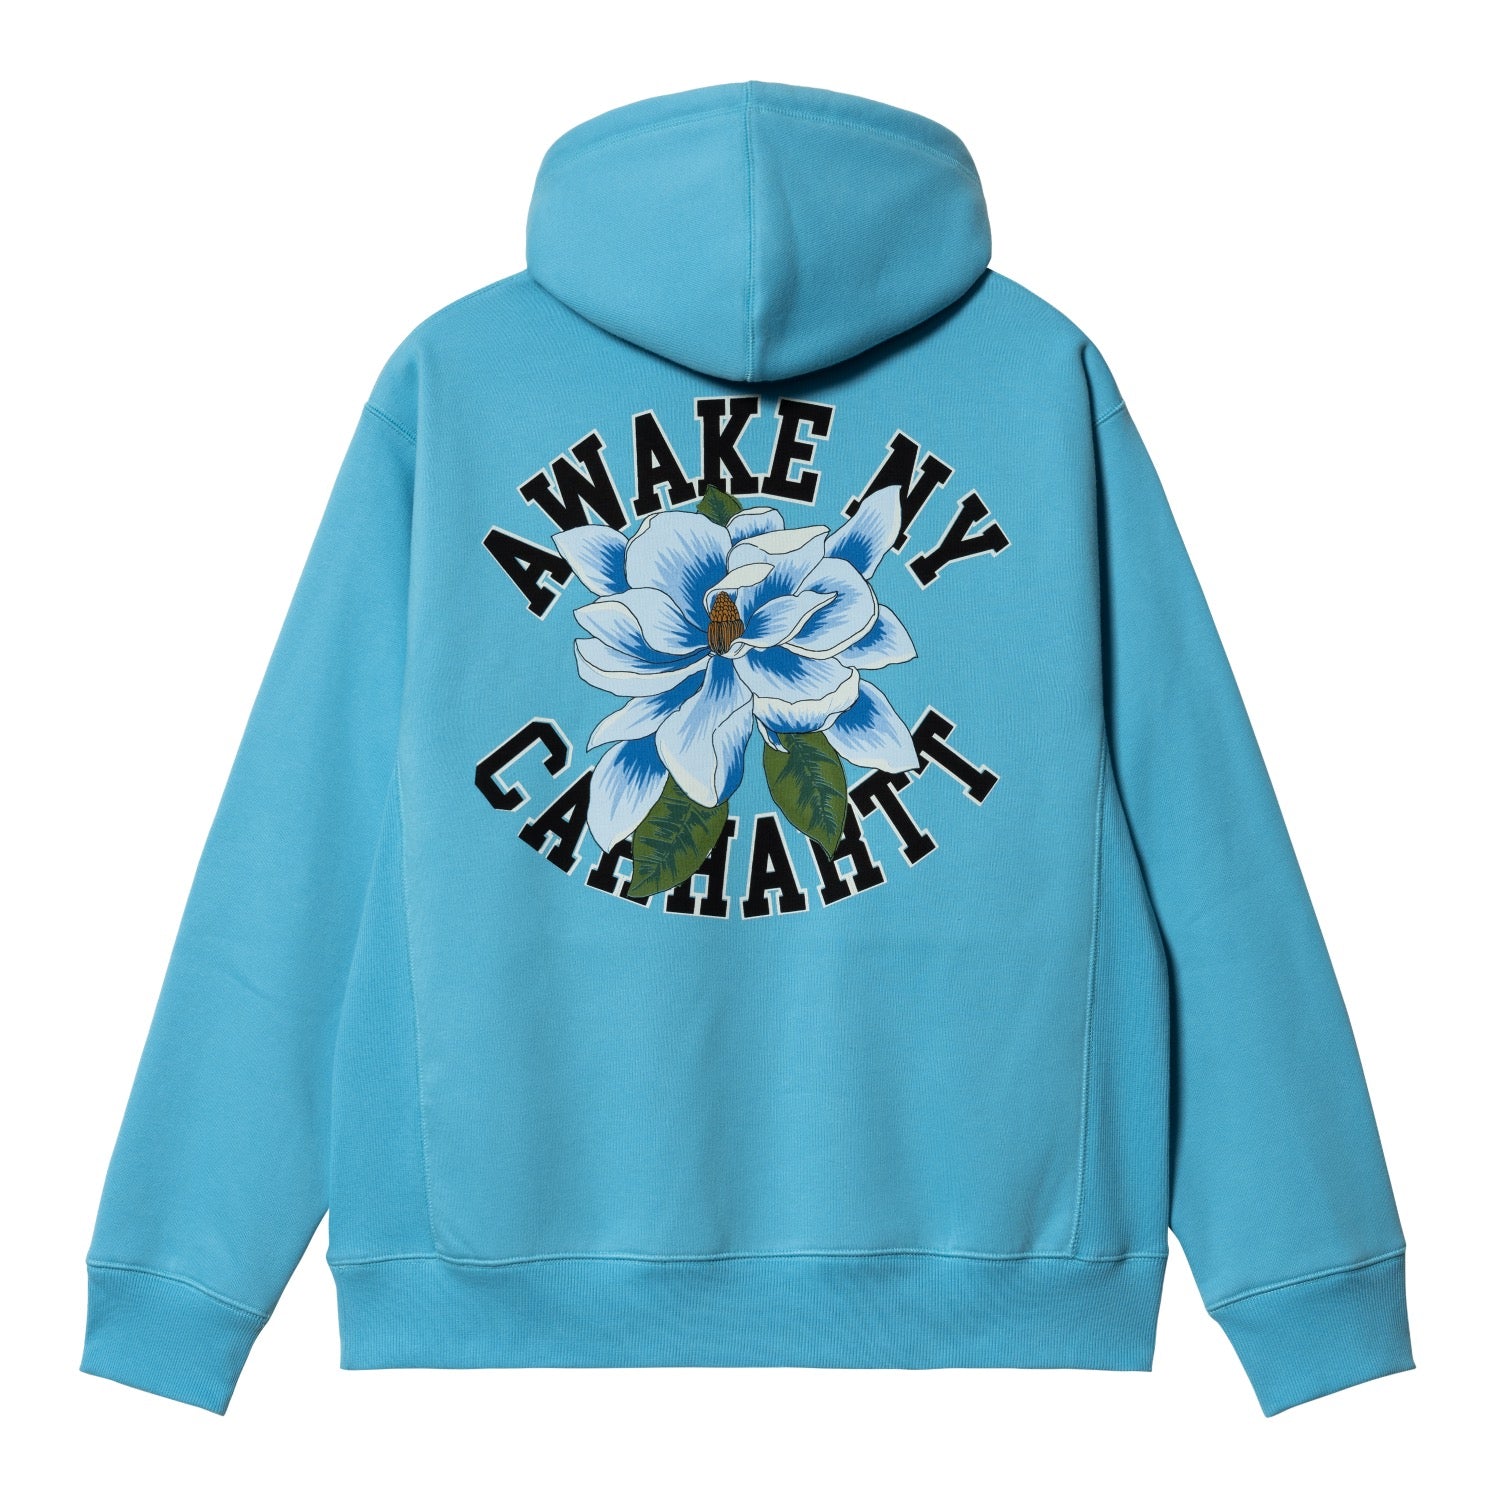 XL Carhartt WIP / Awake NY Sweatshirt